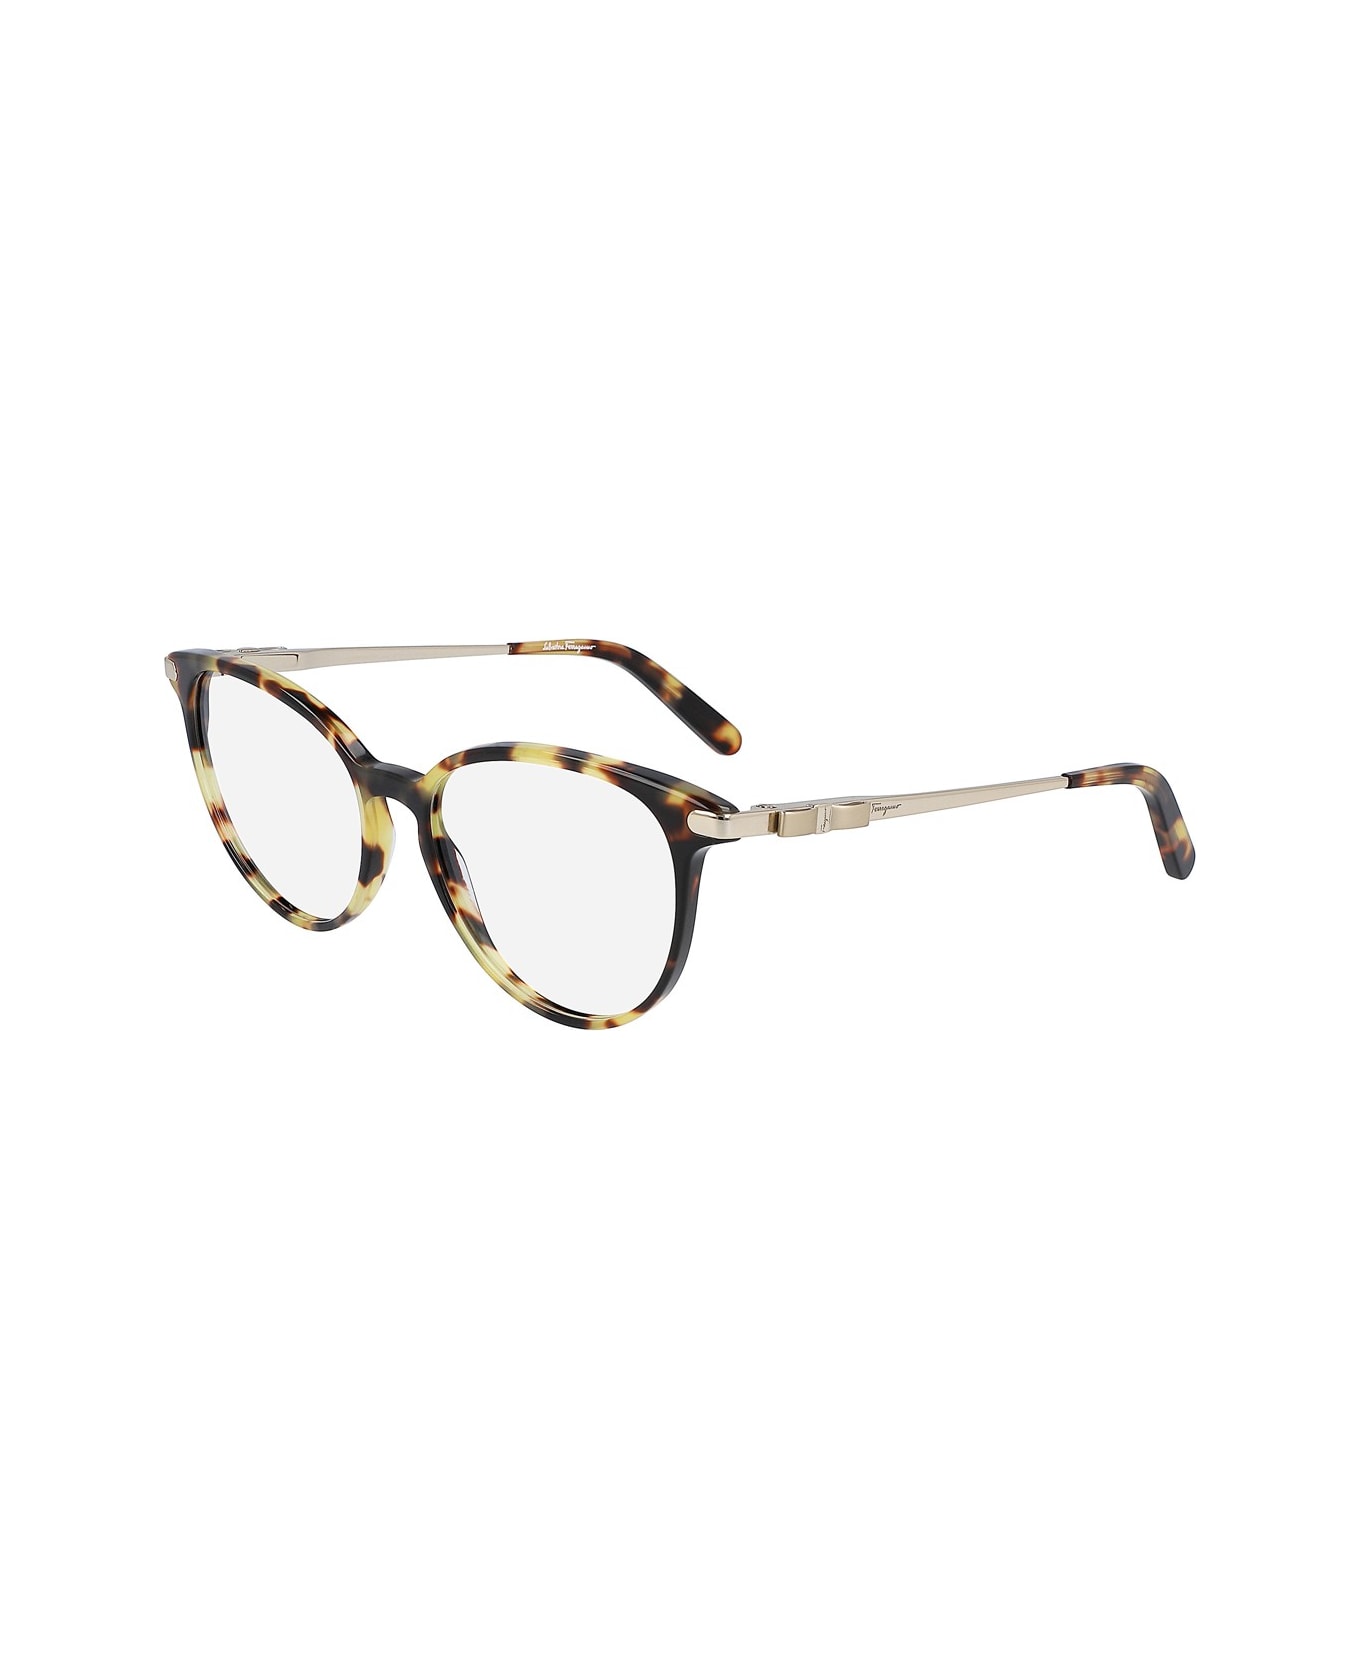 Salvatore Ferragamo Eyewear Sf2862 Glasses - Marrone